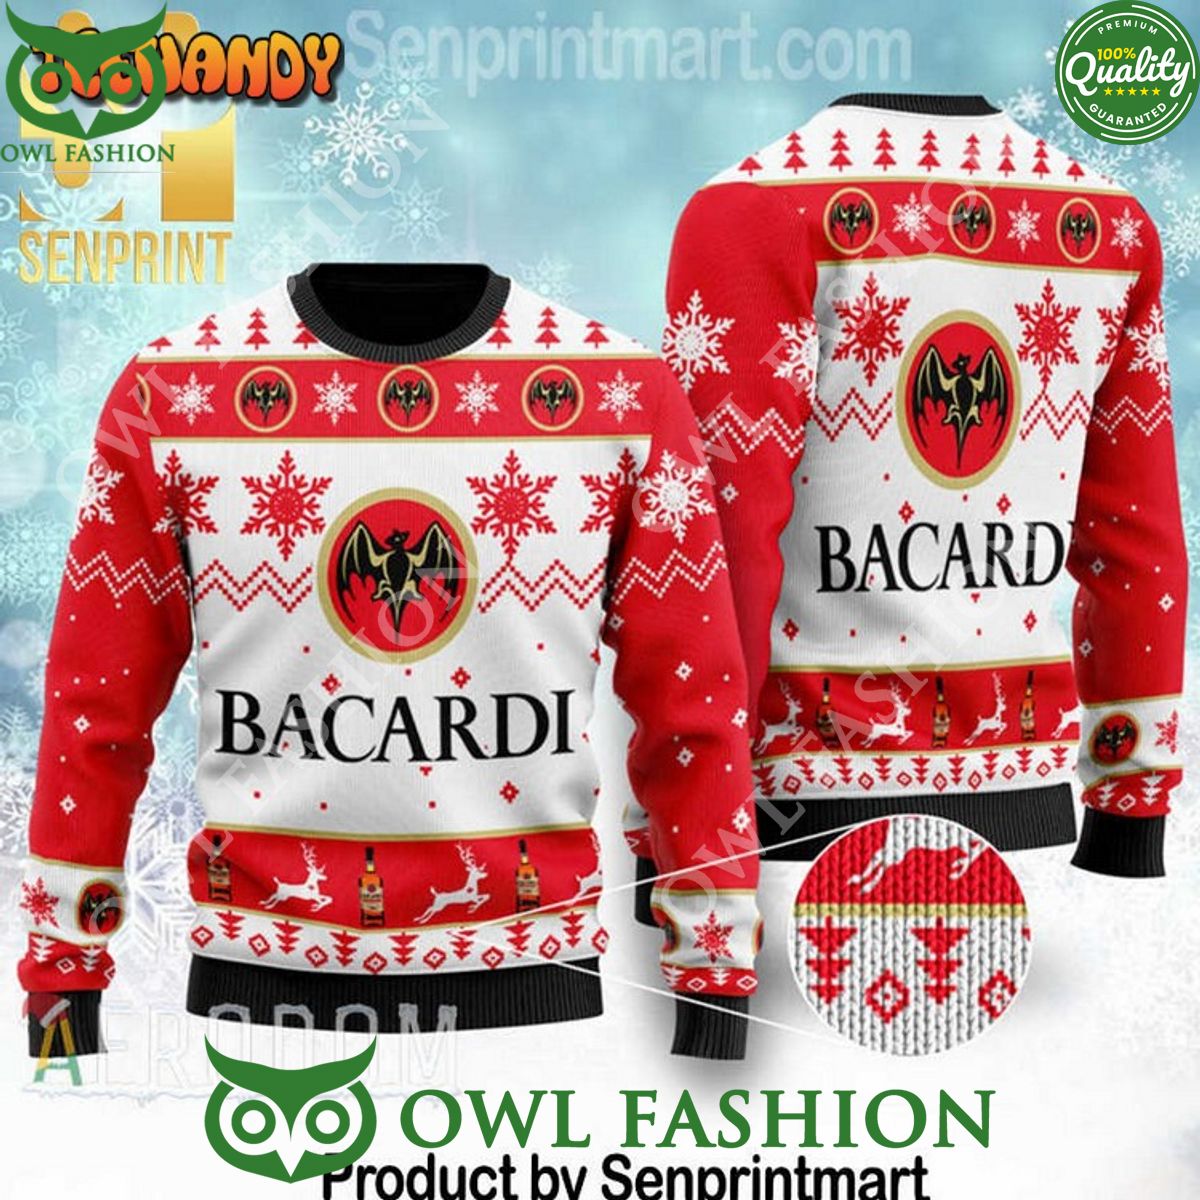 Bacardi Vacation Time Christmas Wool Sweater Nice photo dude